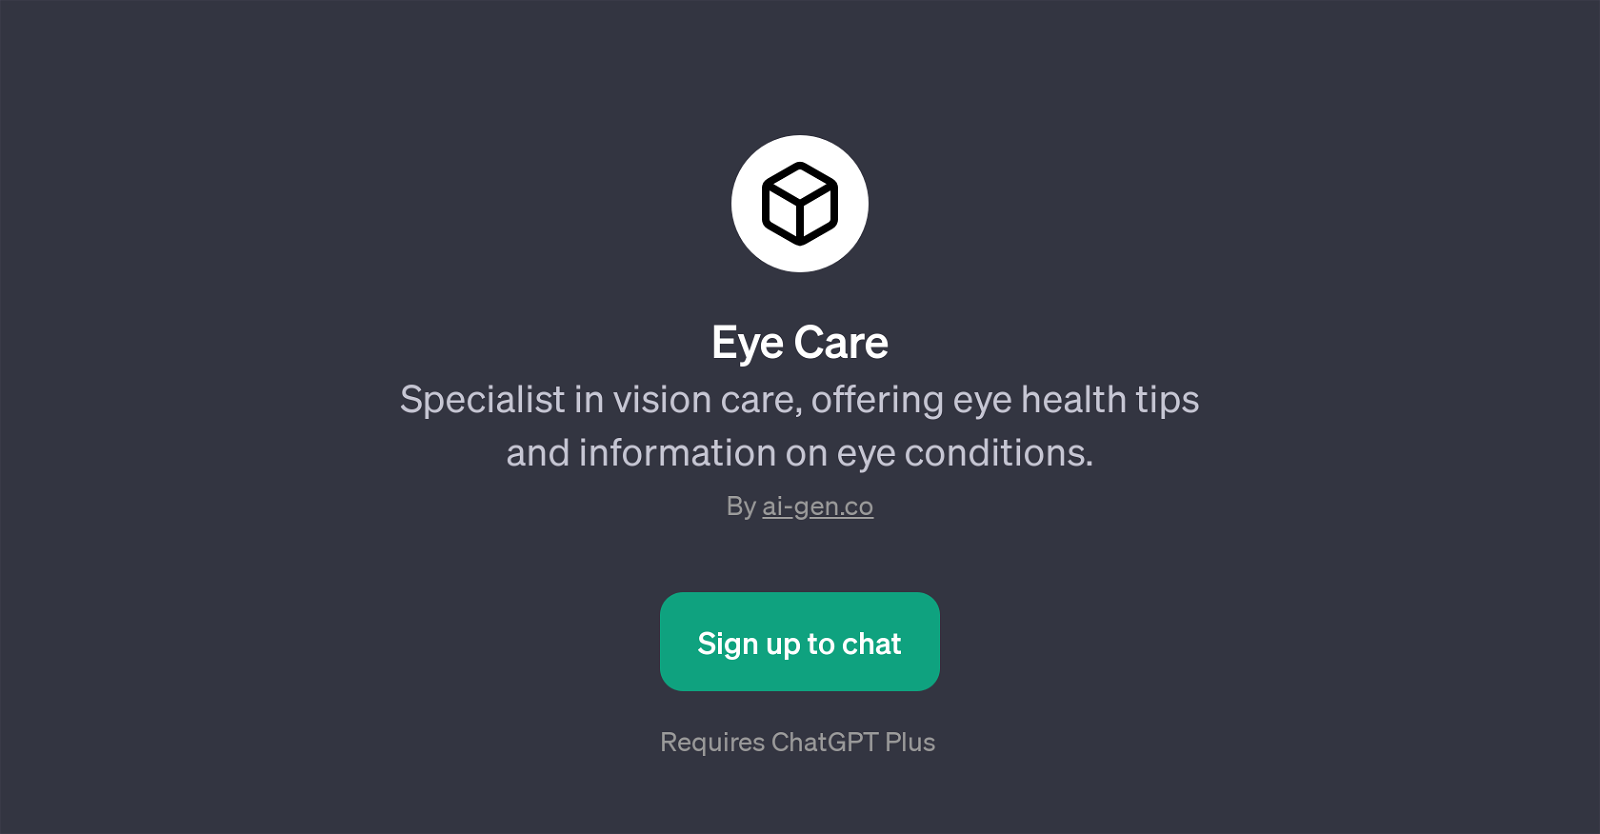 Eye Care website